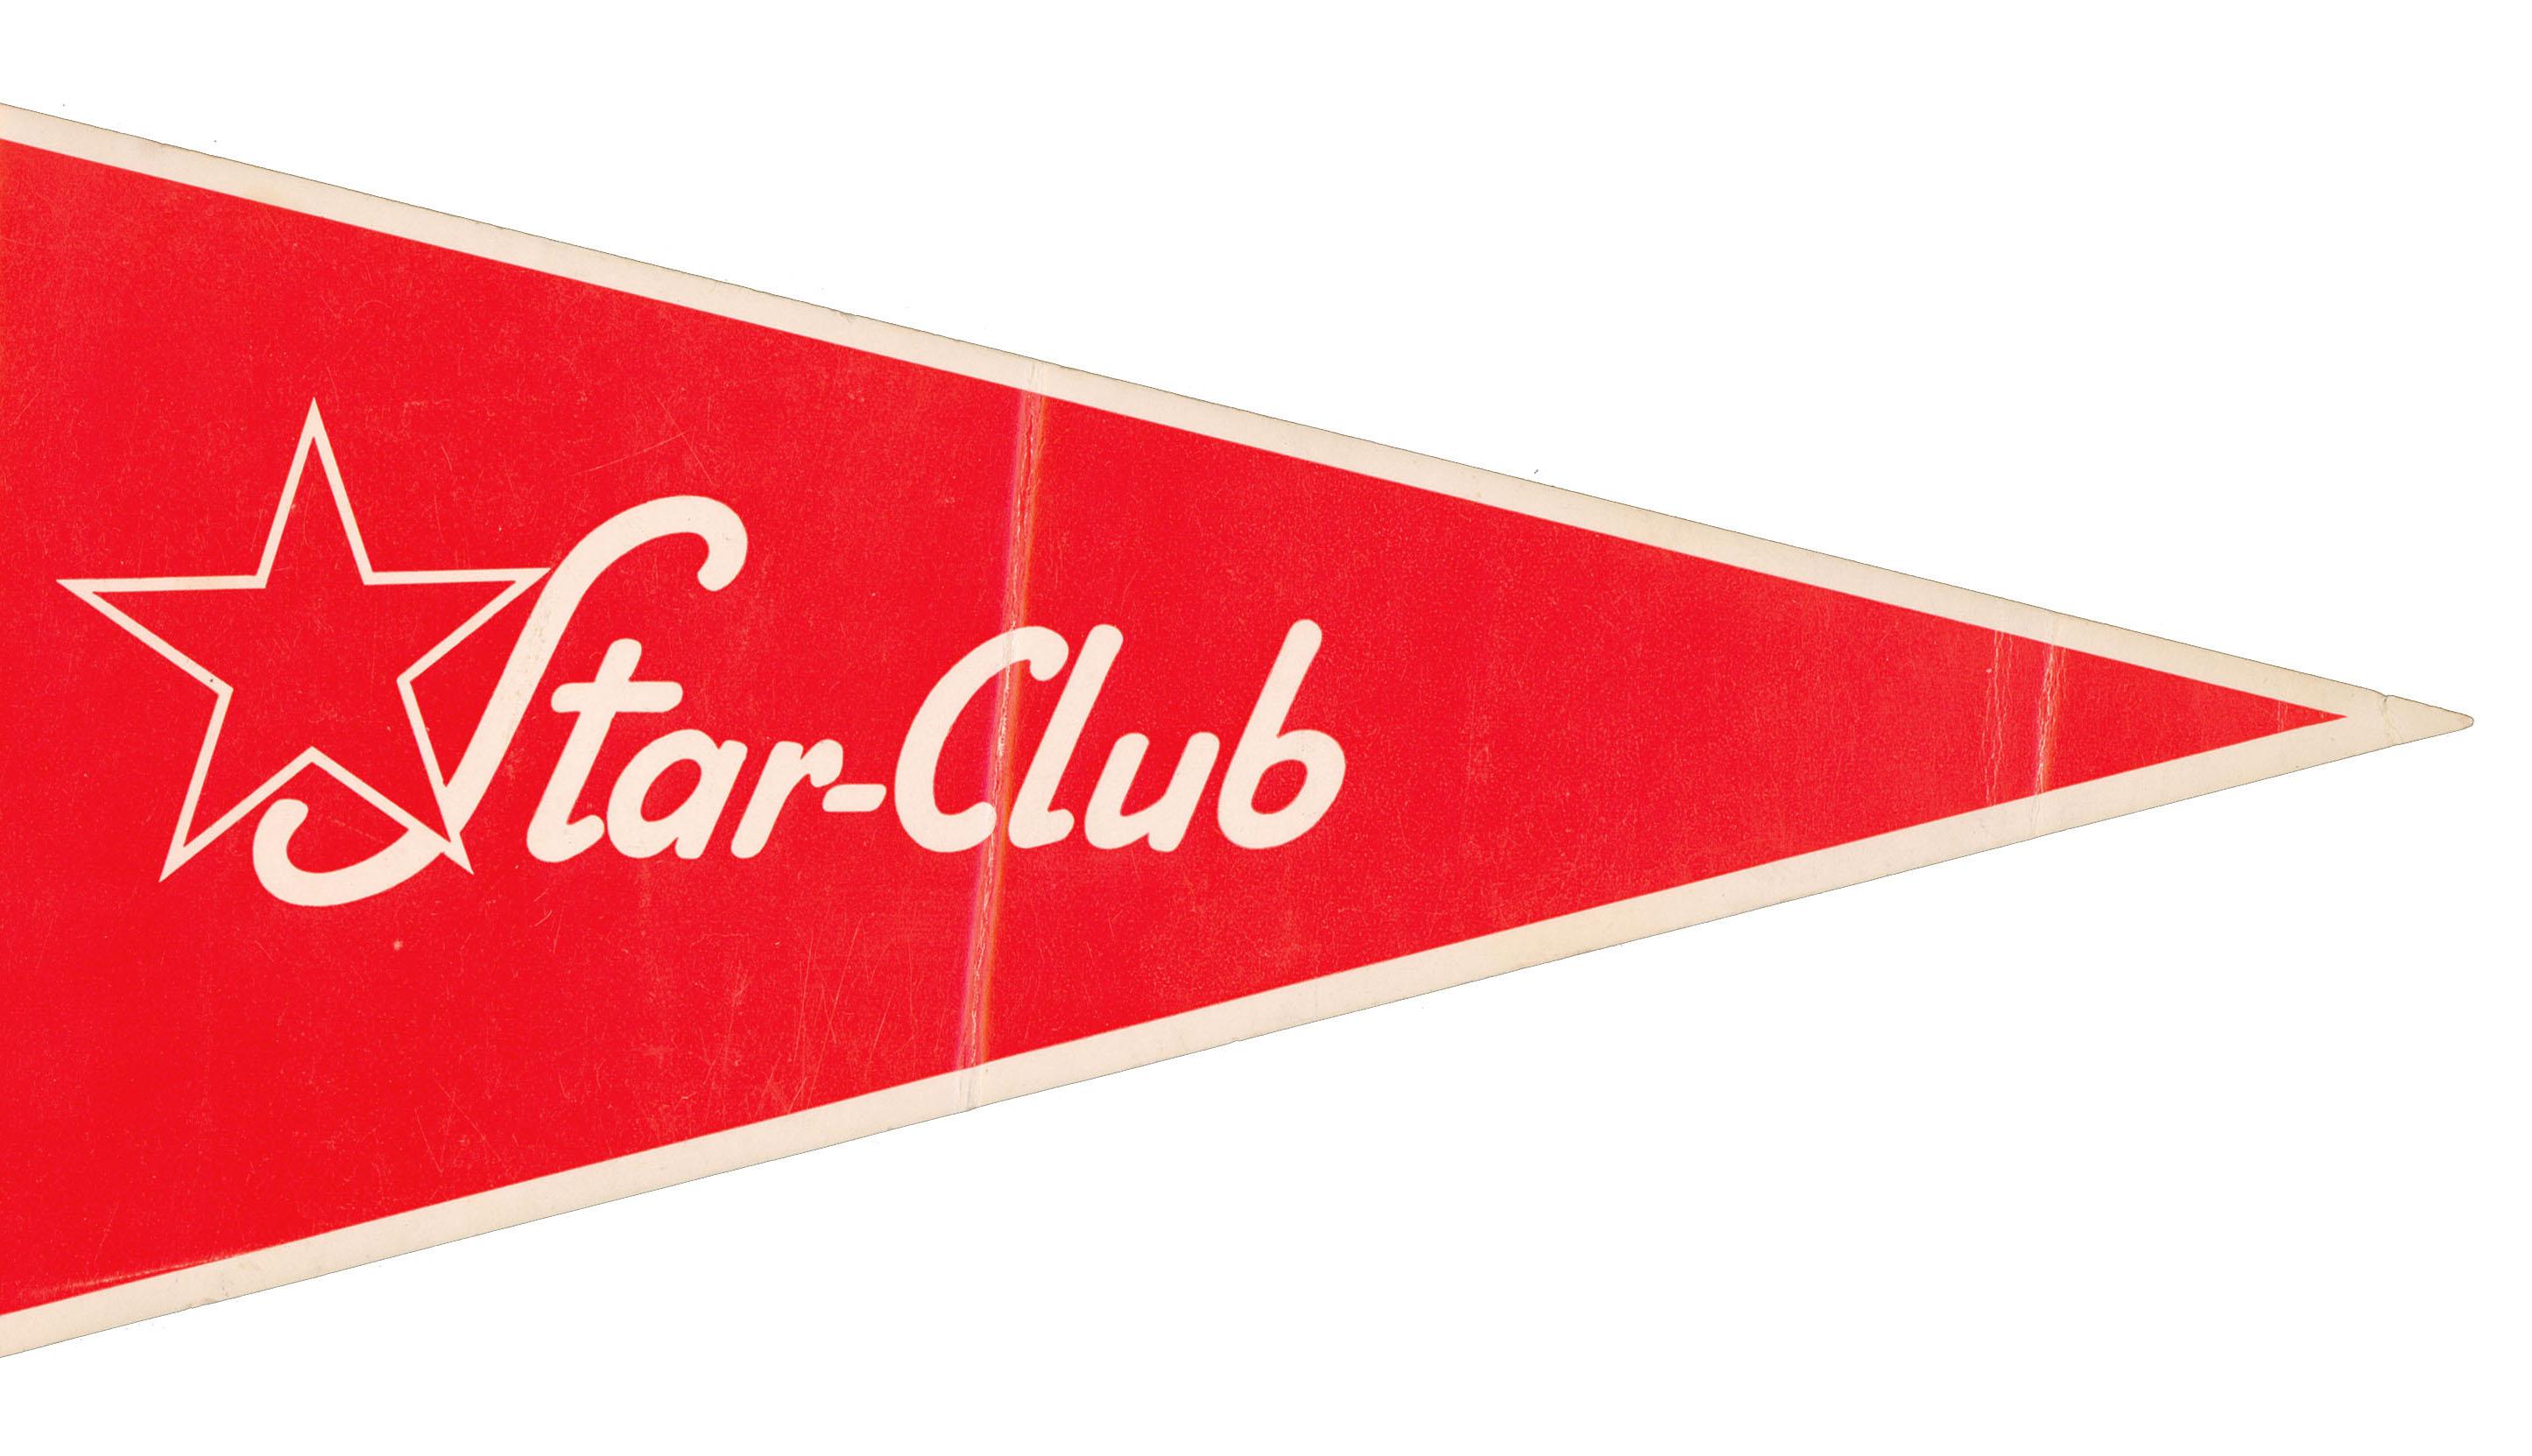 European The Beatles 1960s Star-Club Hamburg Banner For Sale